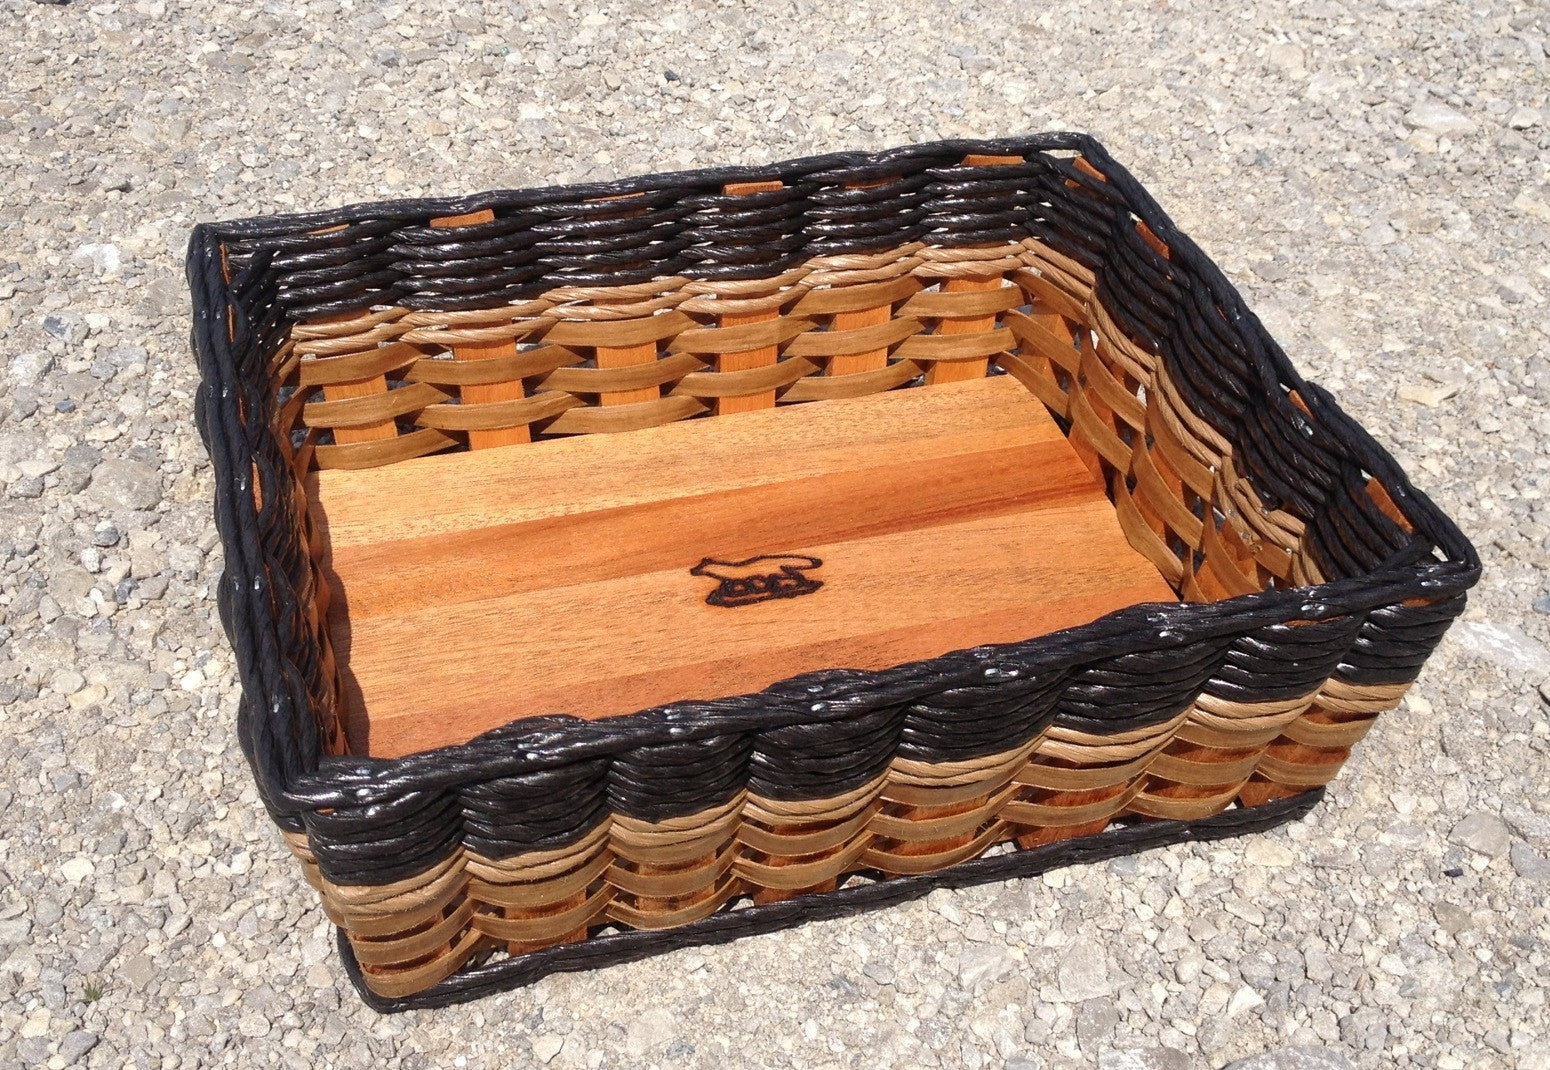 Shelf basket with angled sides